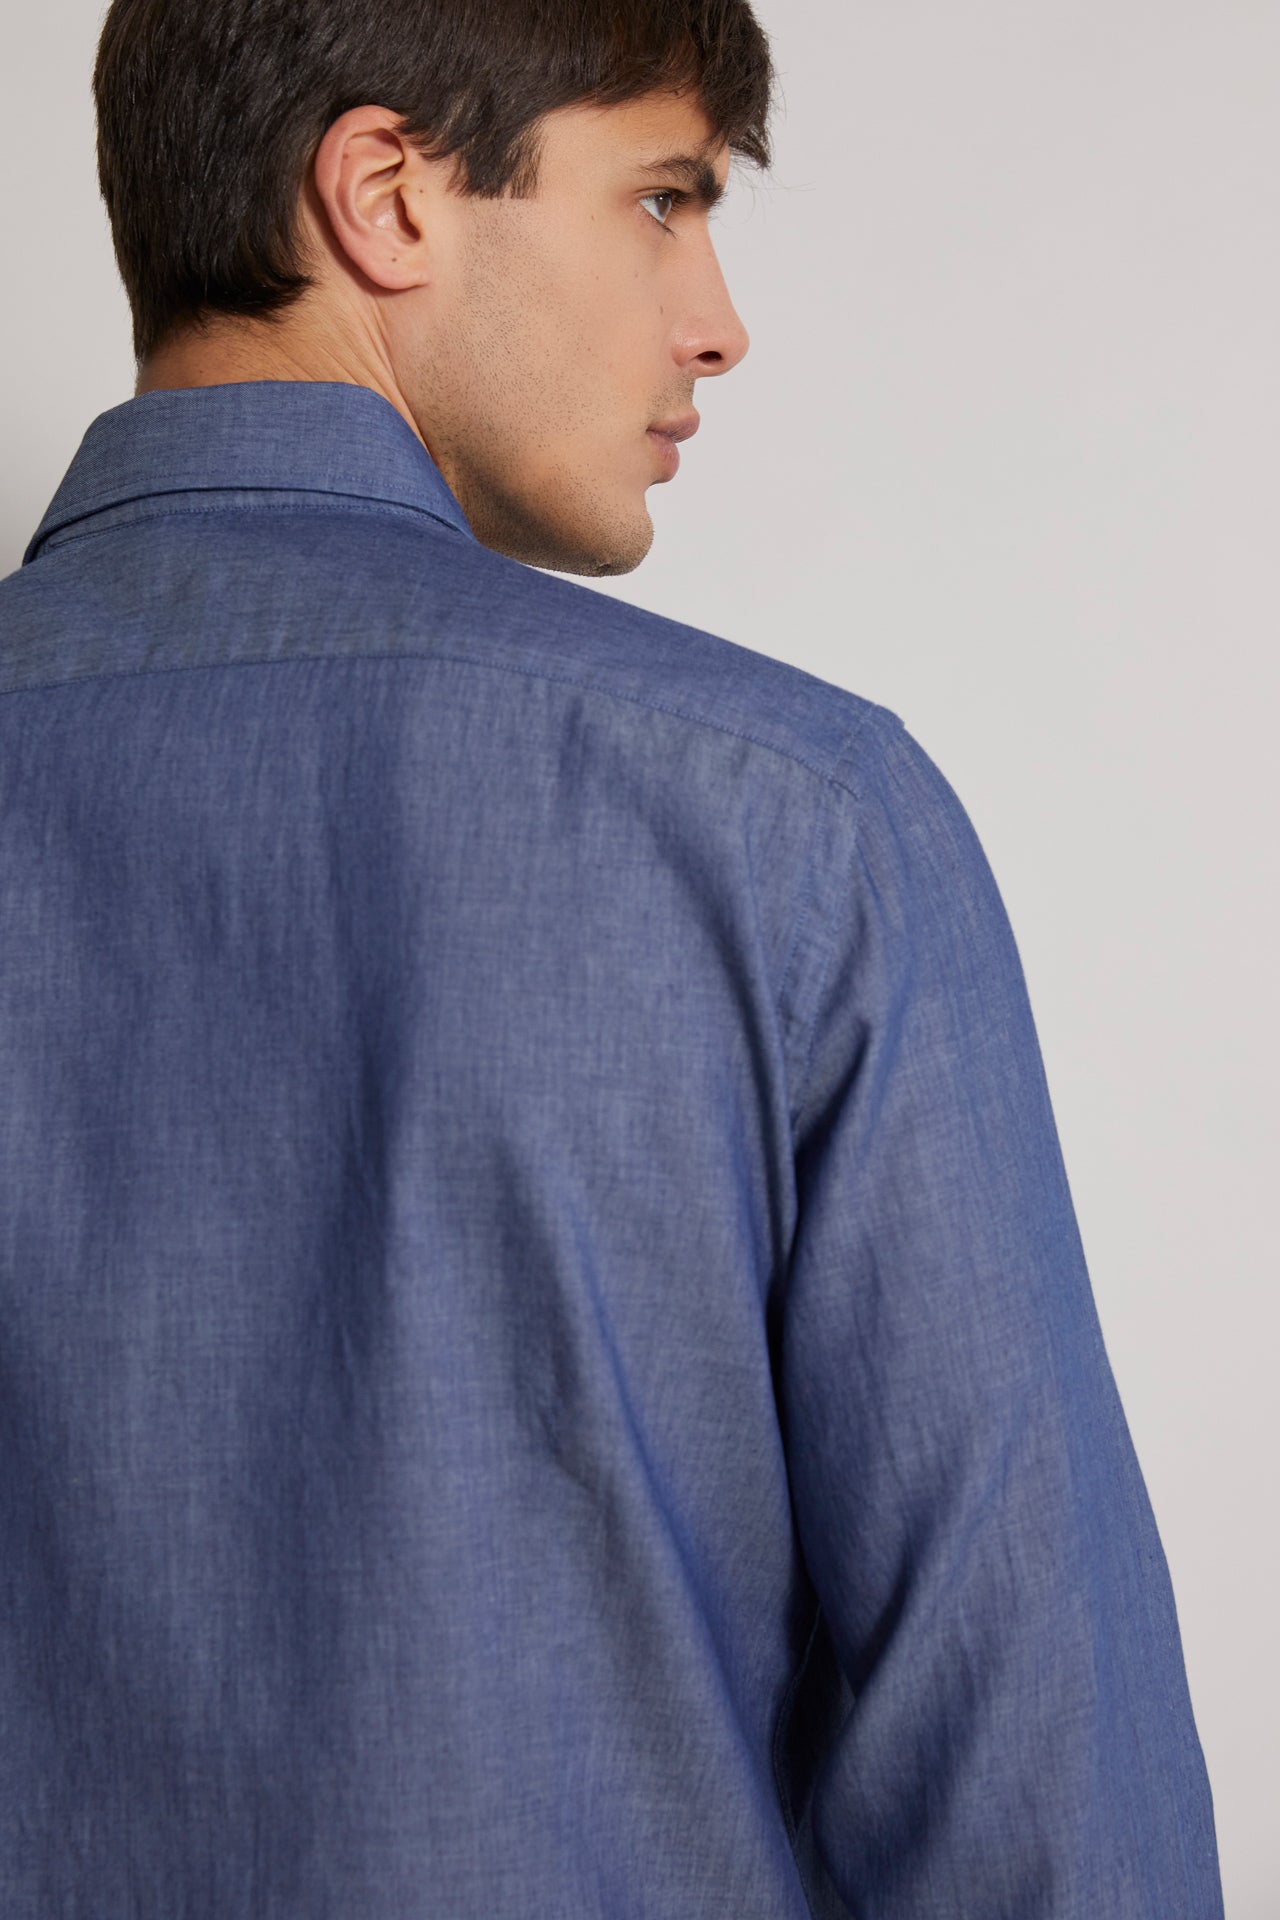 men's designer denim shirt with long sleeves in navy blue - back view